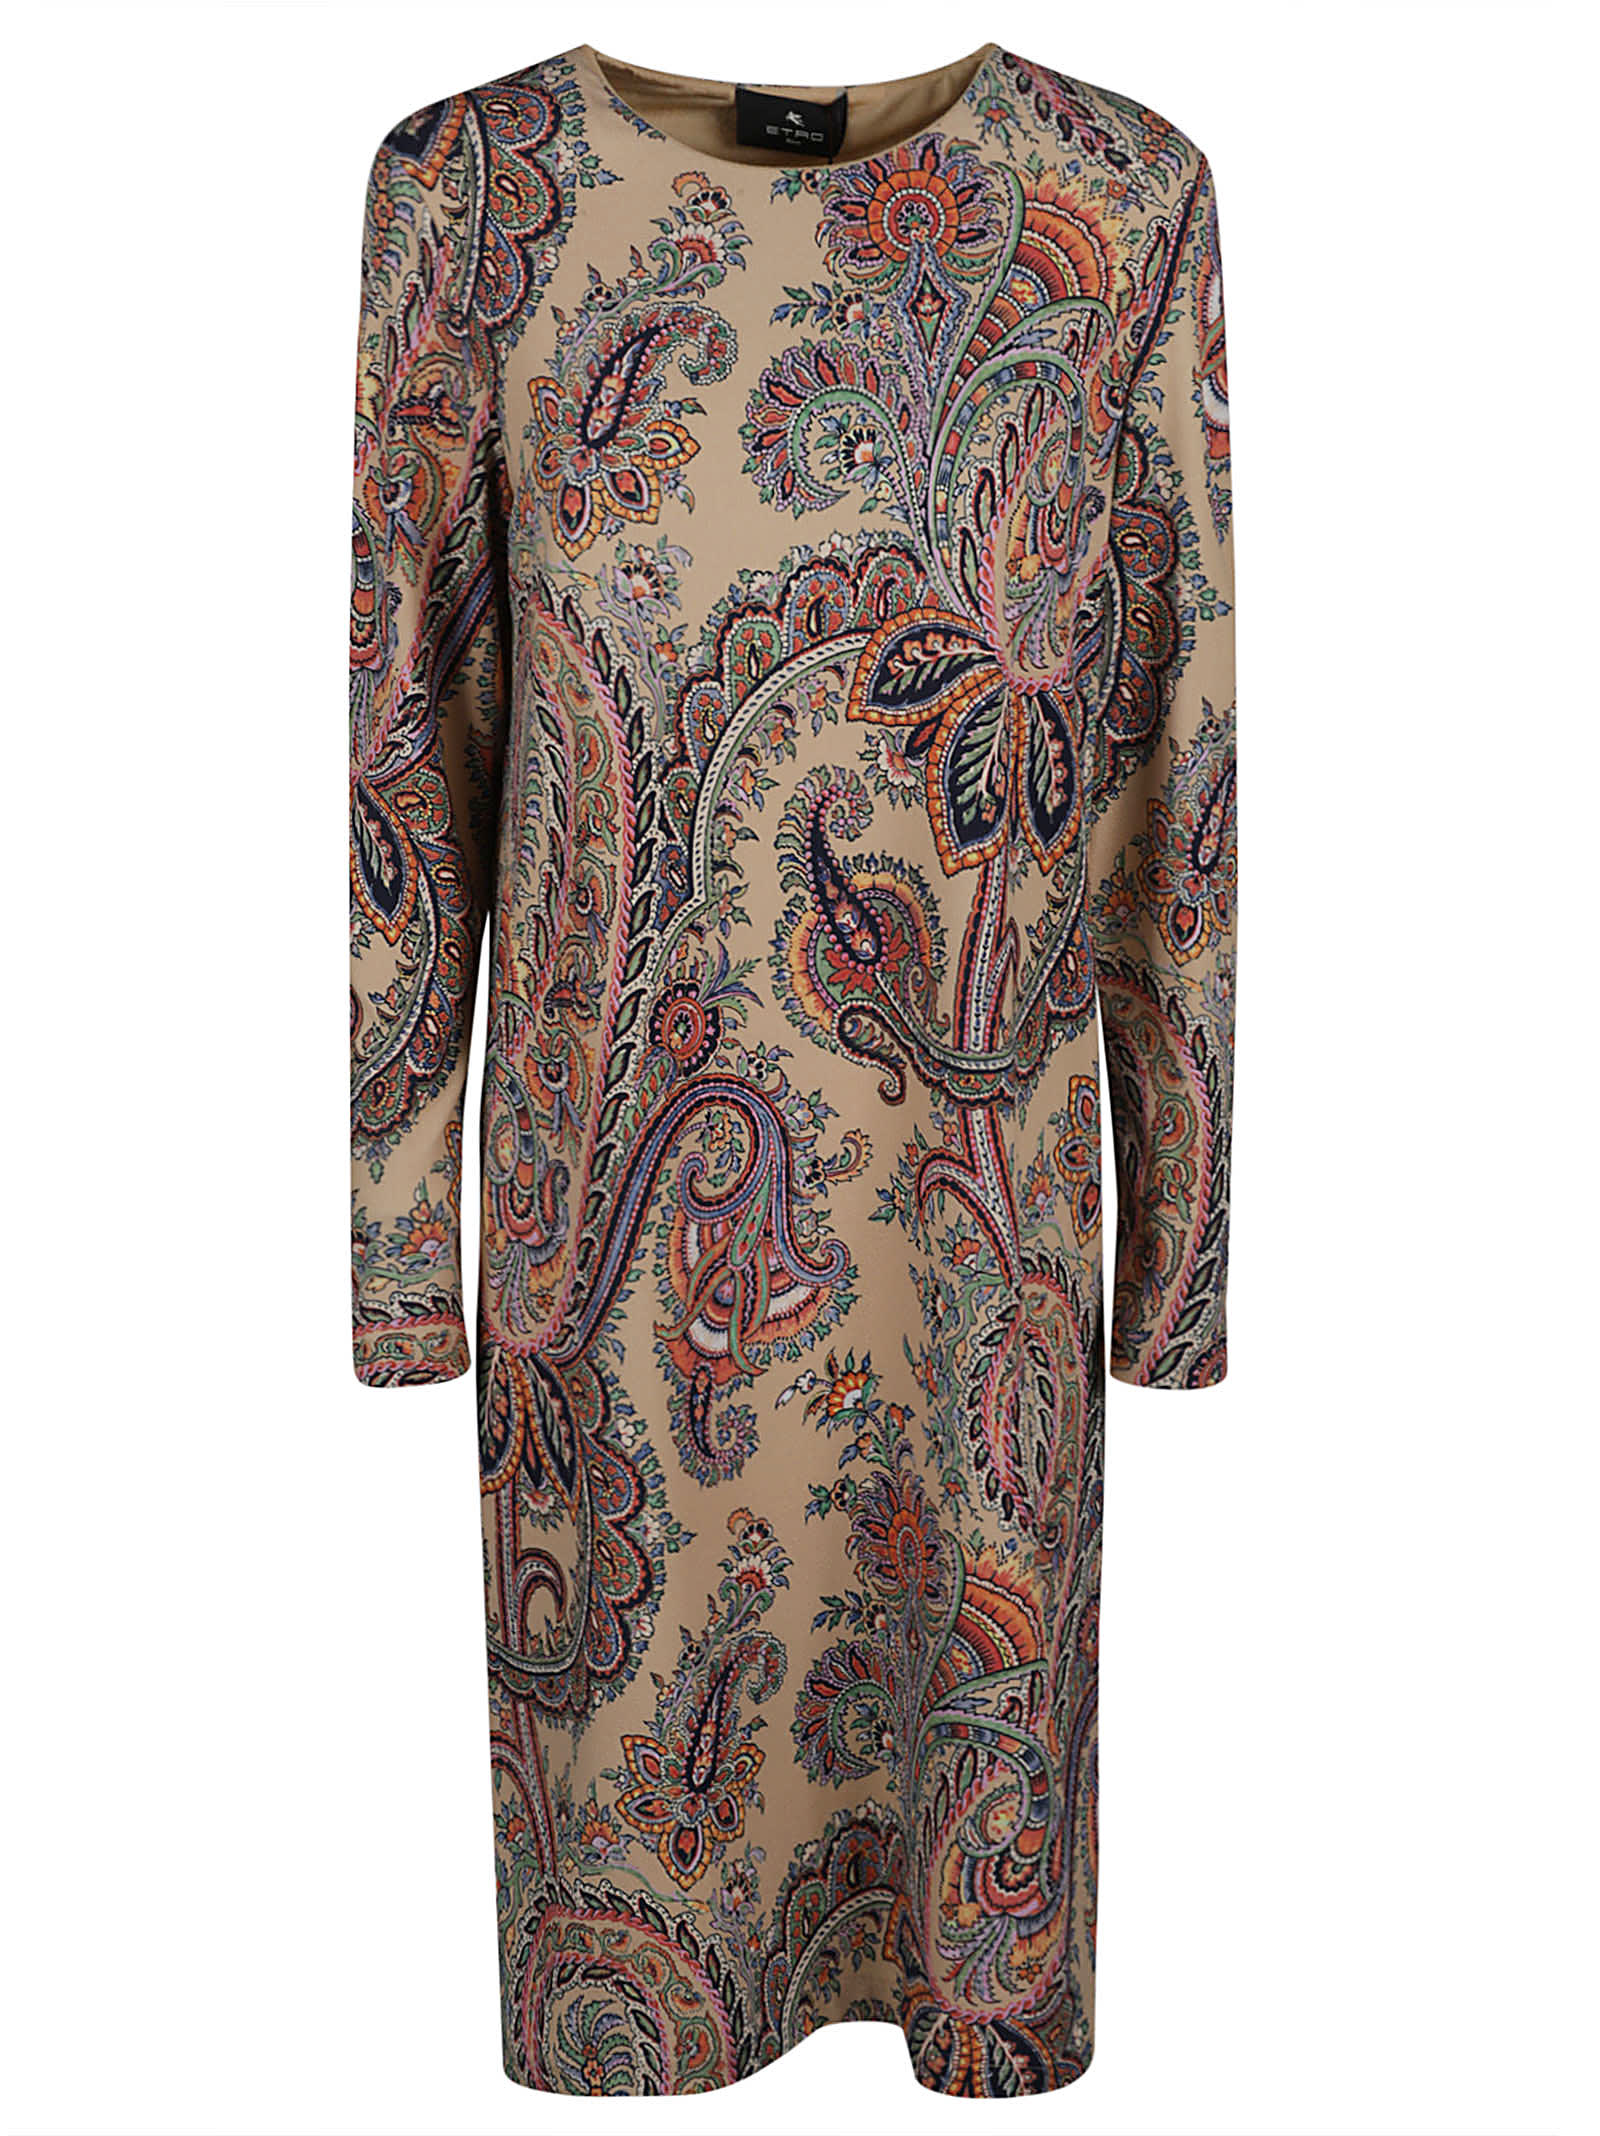 Etro Paisley Print Dress